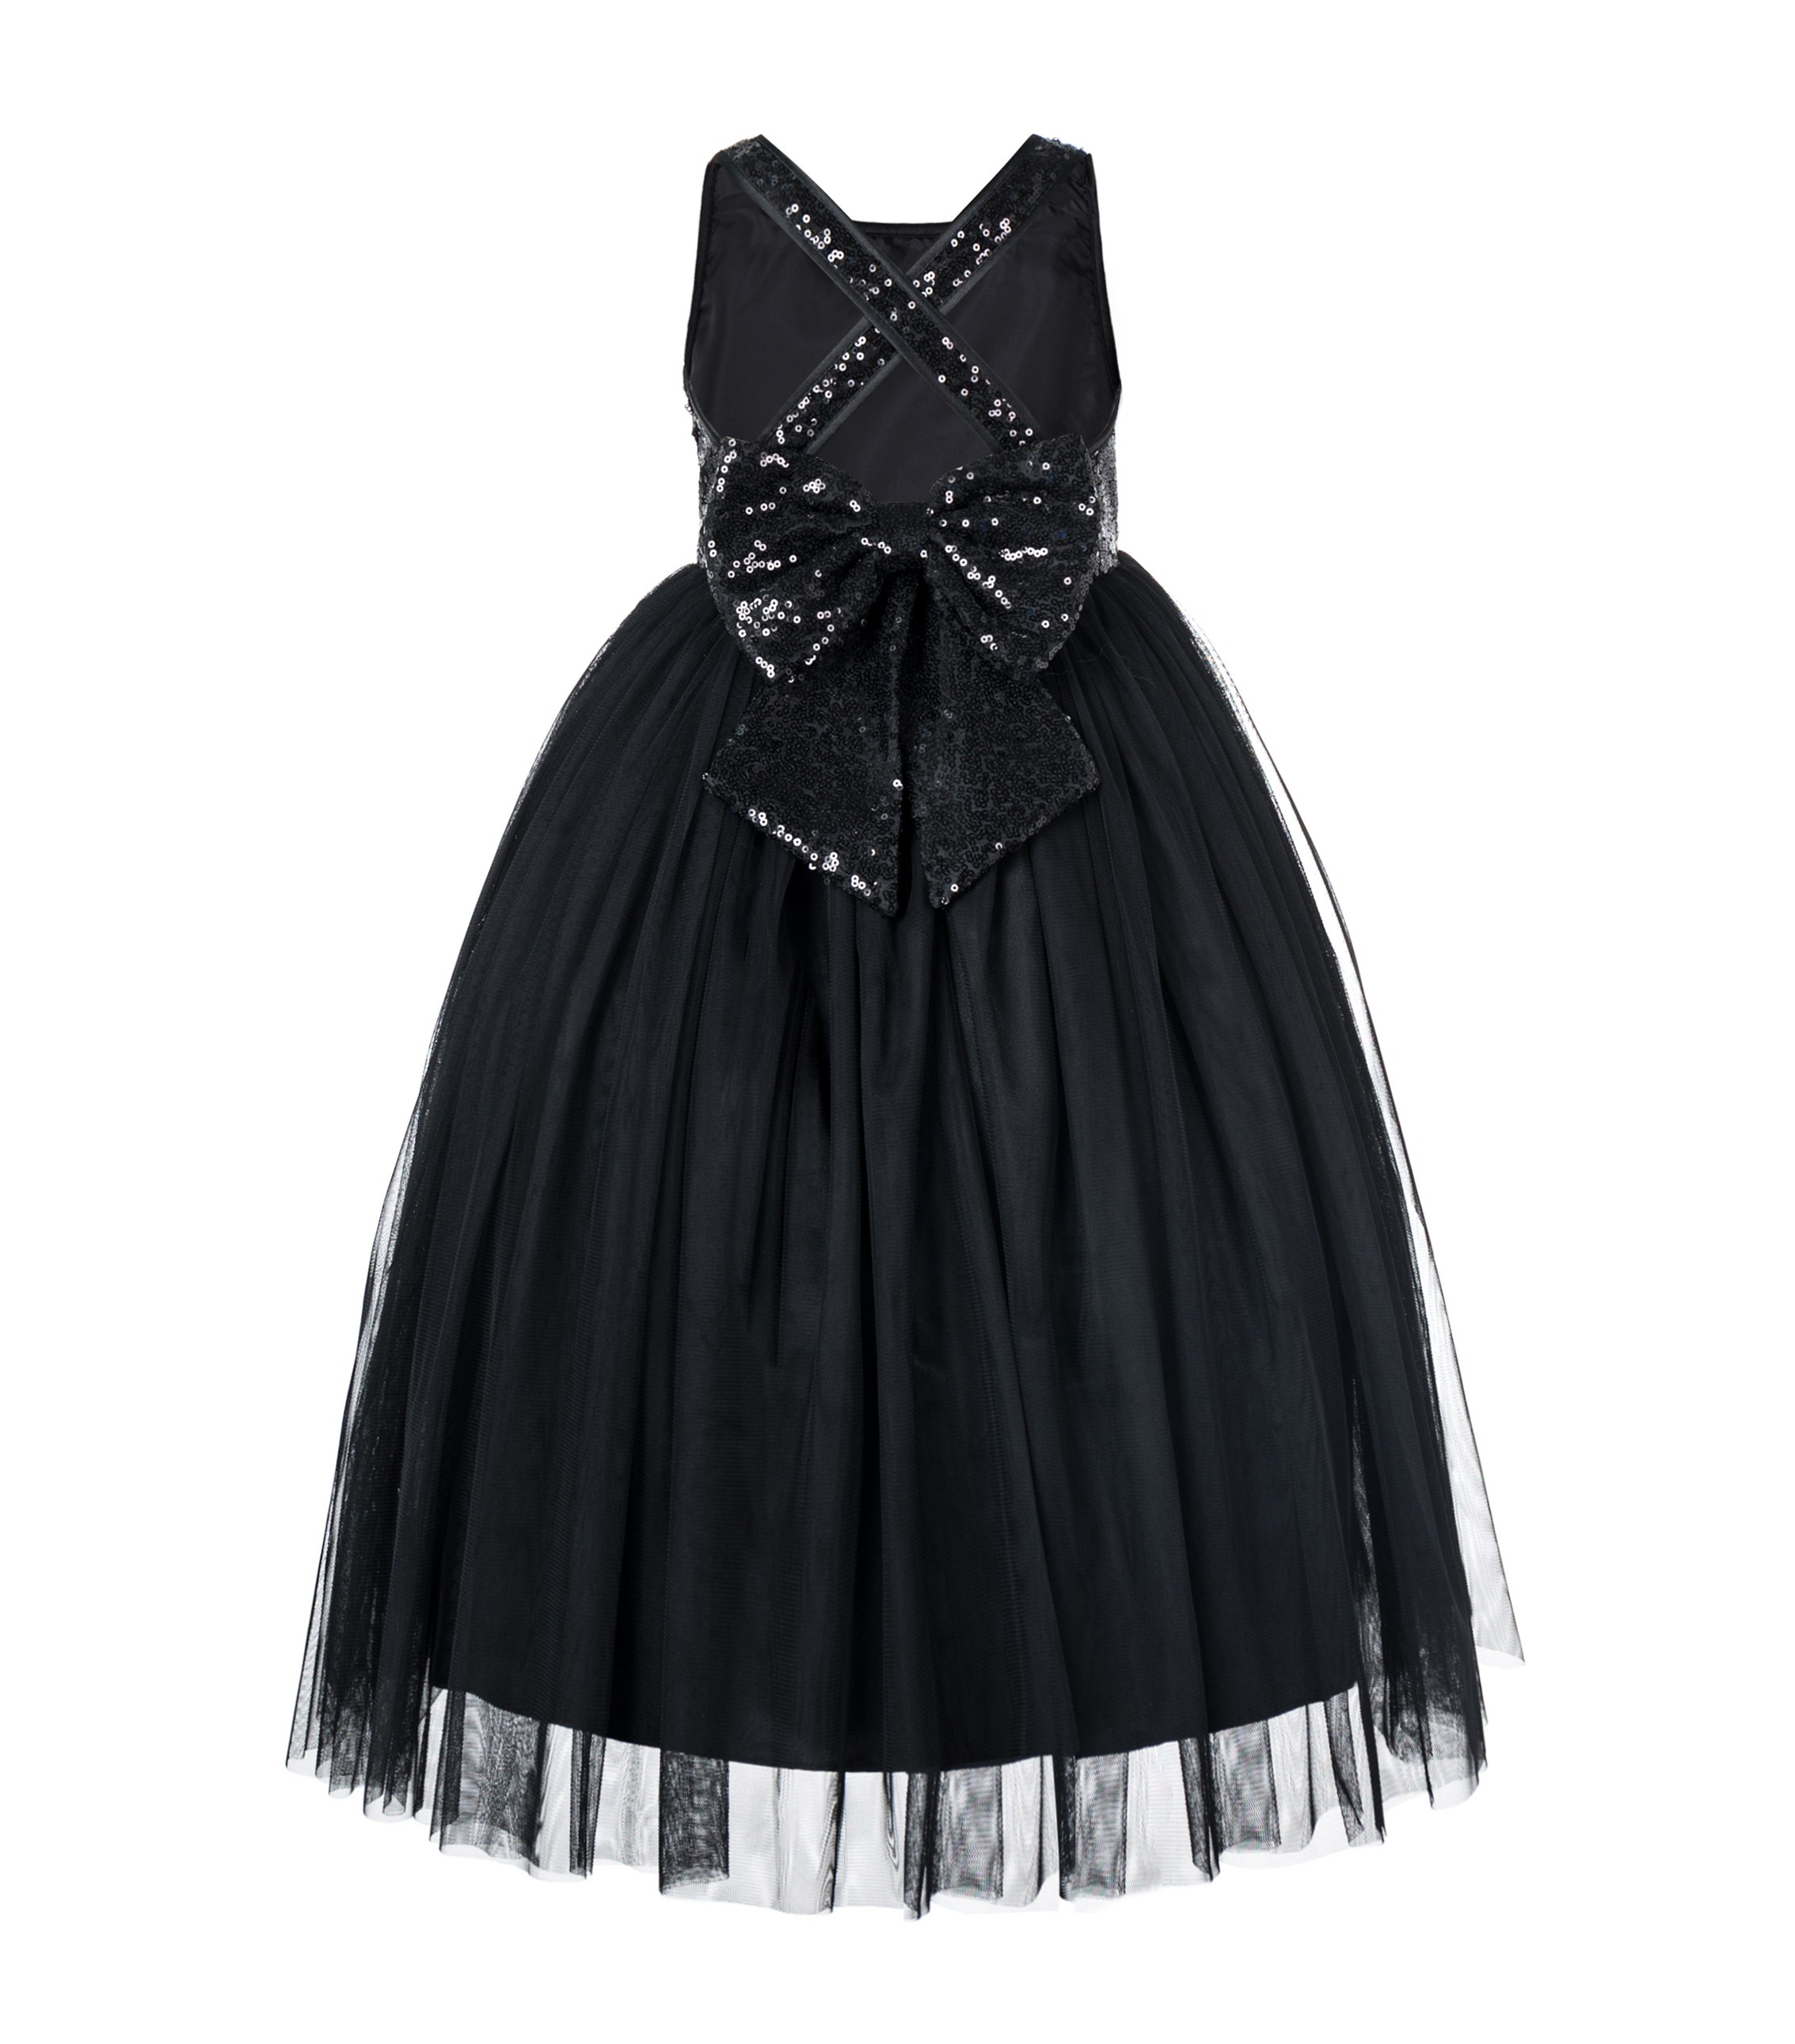 Black Crossed Straps A-Line Flower Girl Dress 177